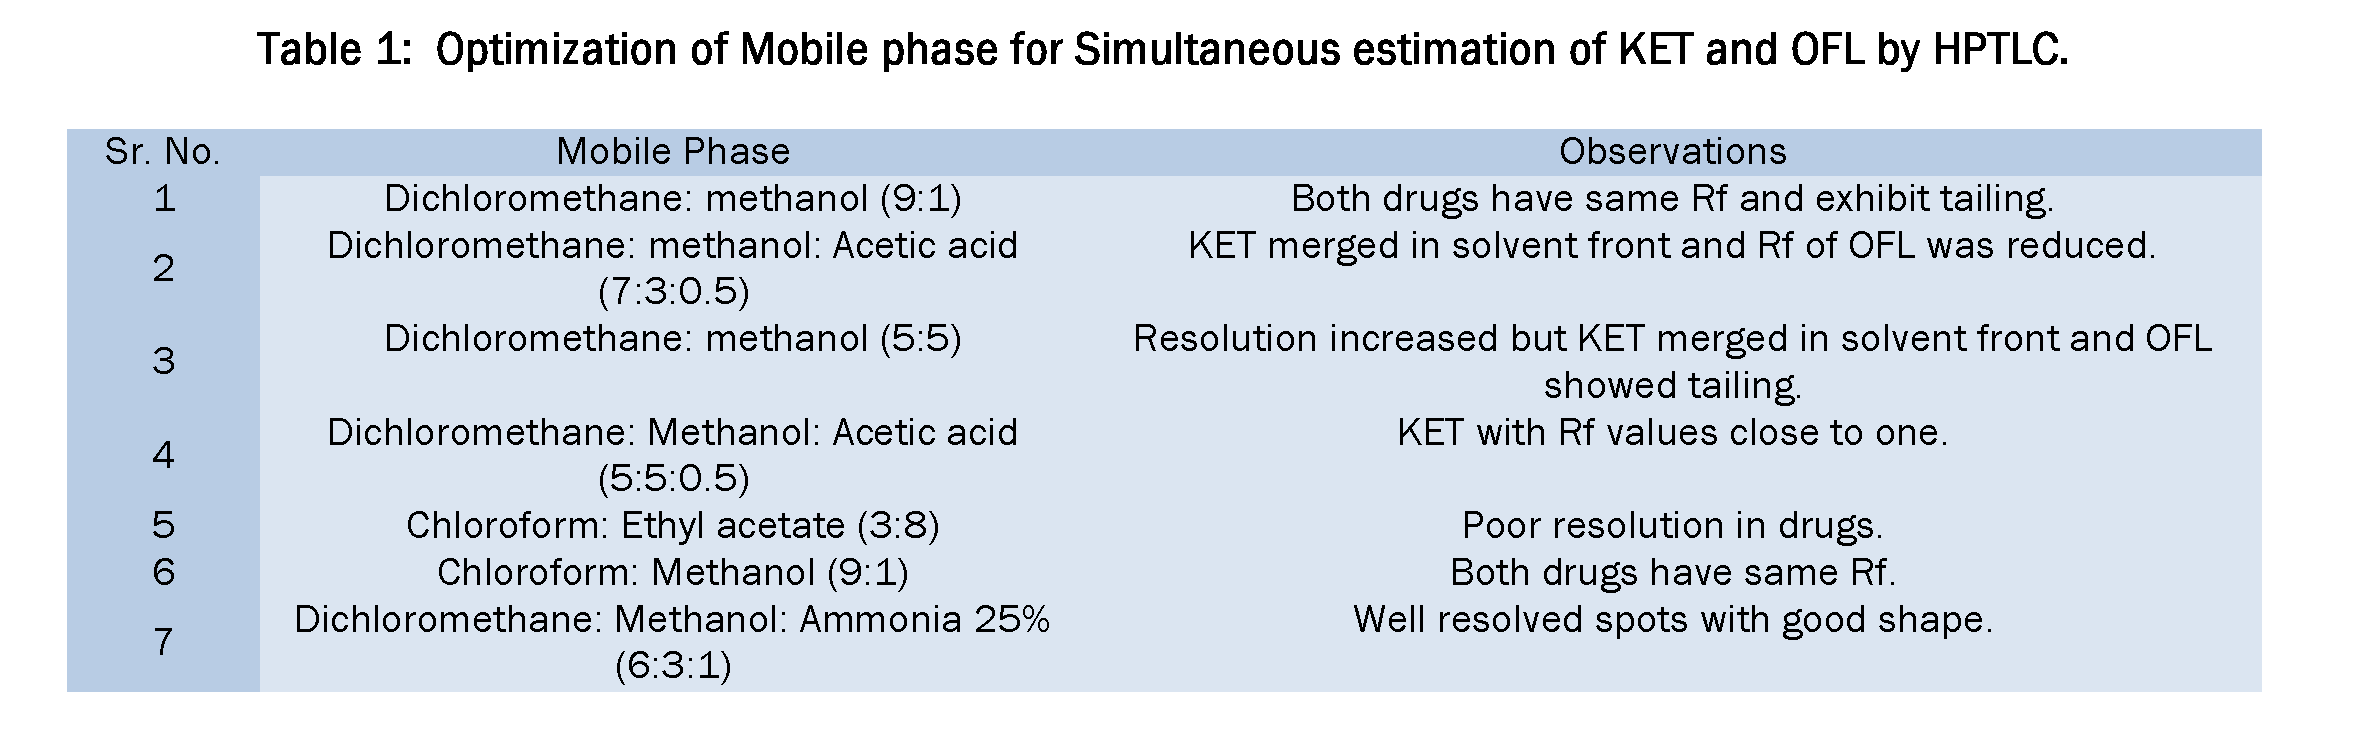 Pharmaceutical-Analysis-Optimization-Mobile-phase-Simultaneous-estimation-KET